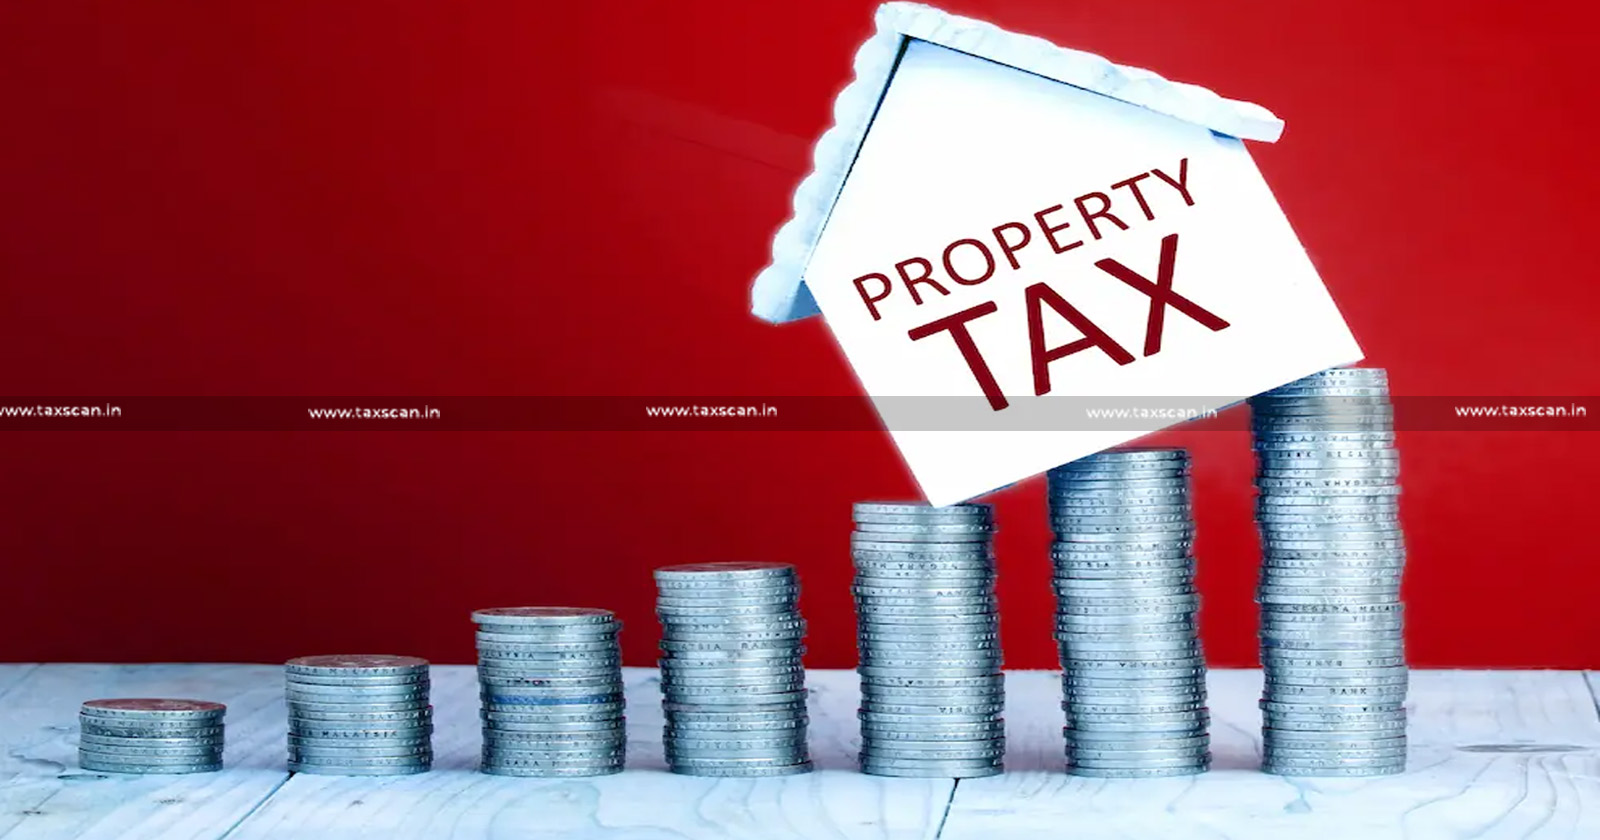 Property Tax - Accountant General Report - Natural Justice Violation - Rockline Entertainments - Karnataka HC -Karnataka High Court - taxscan